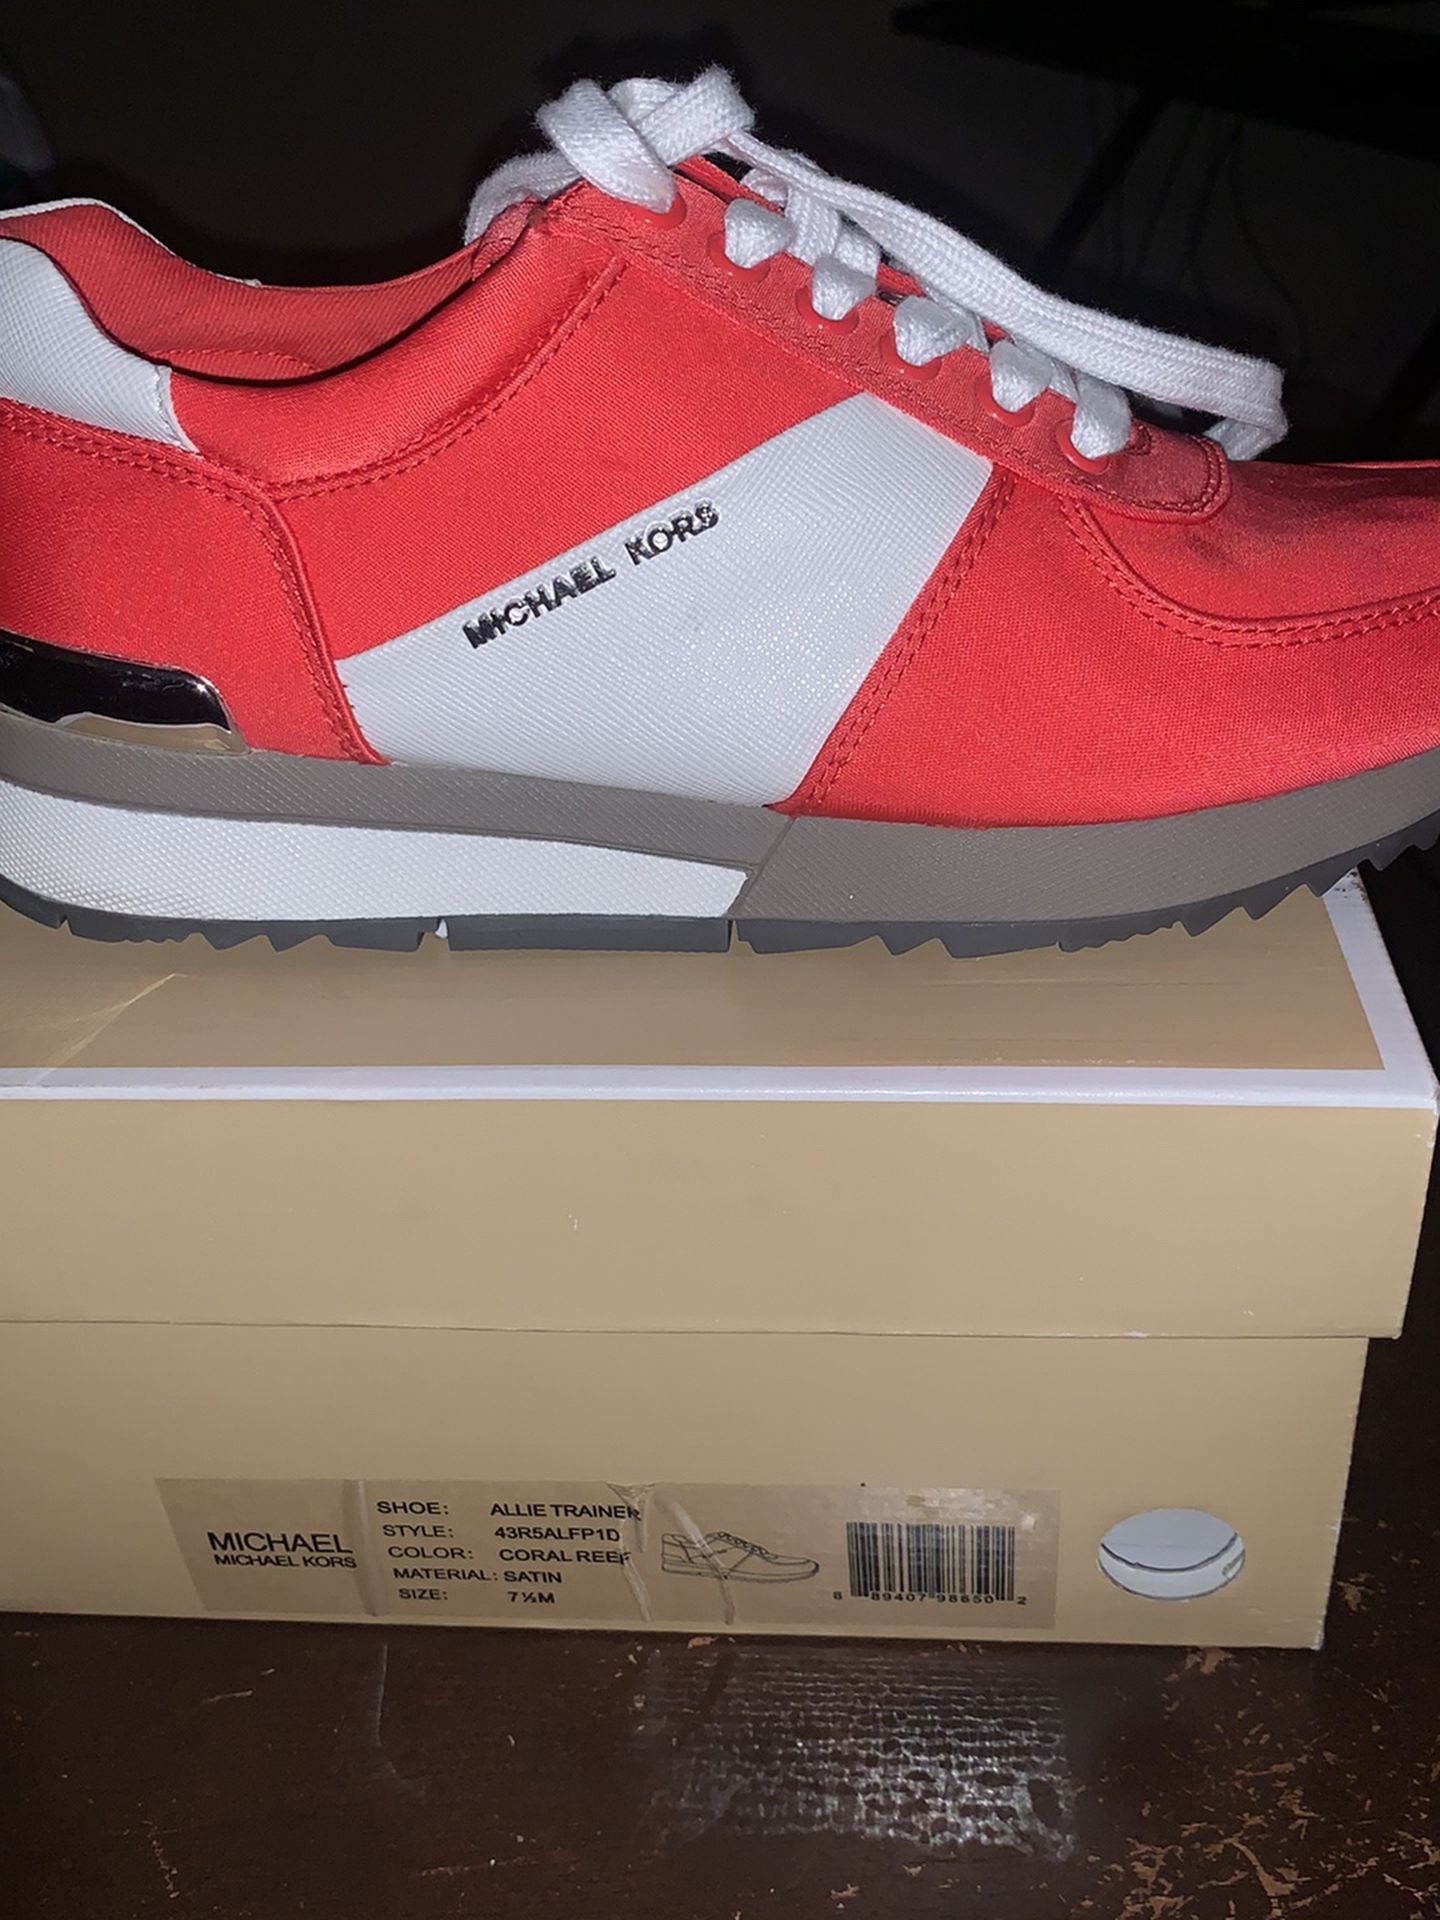 Michael Kors Sneakers-size 7.5 (Peach Color)